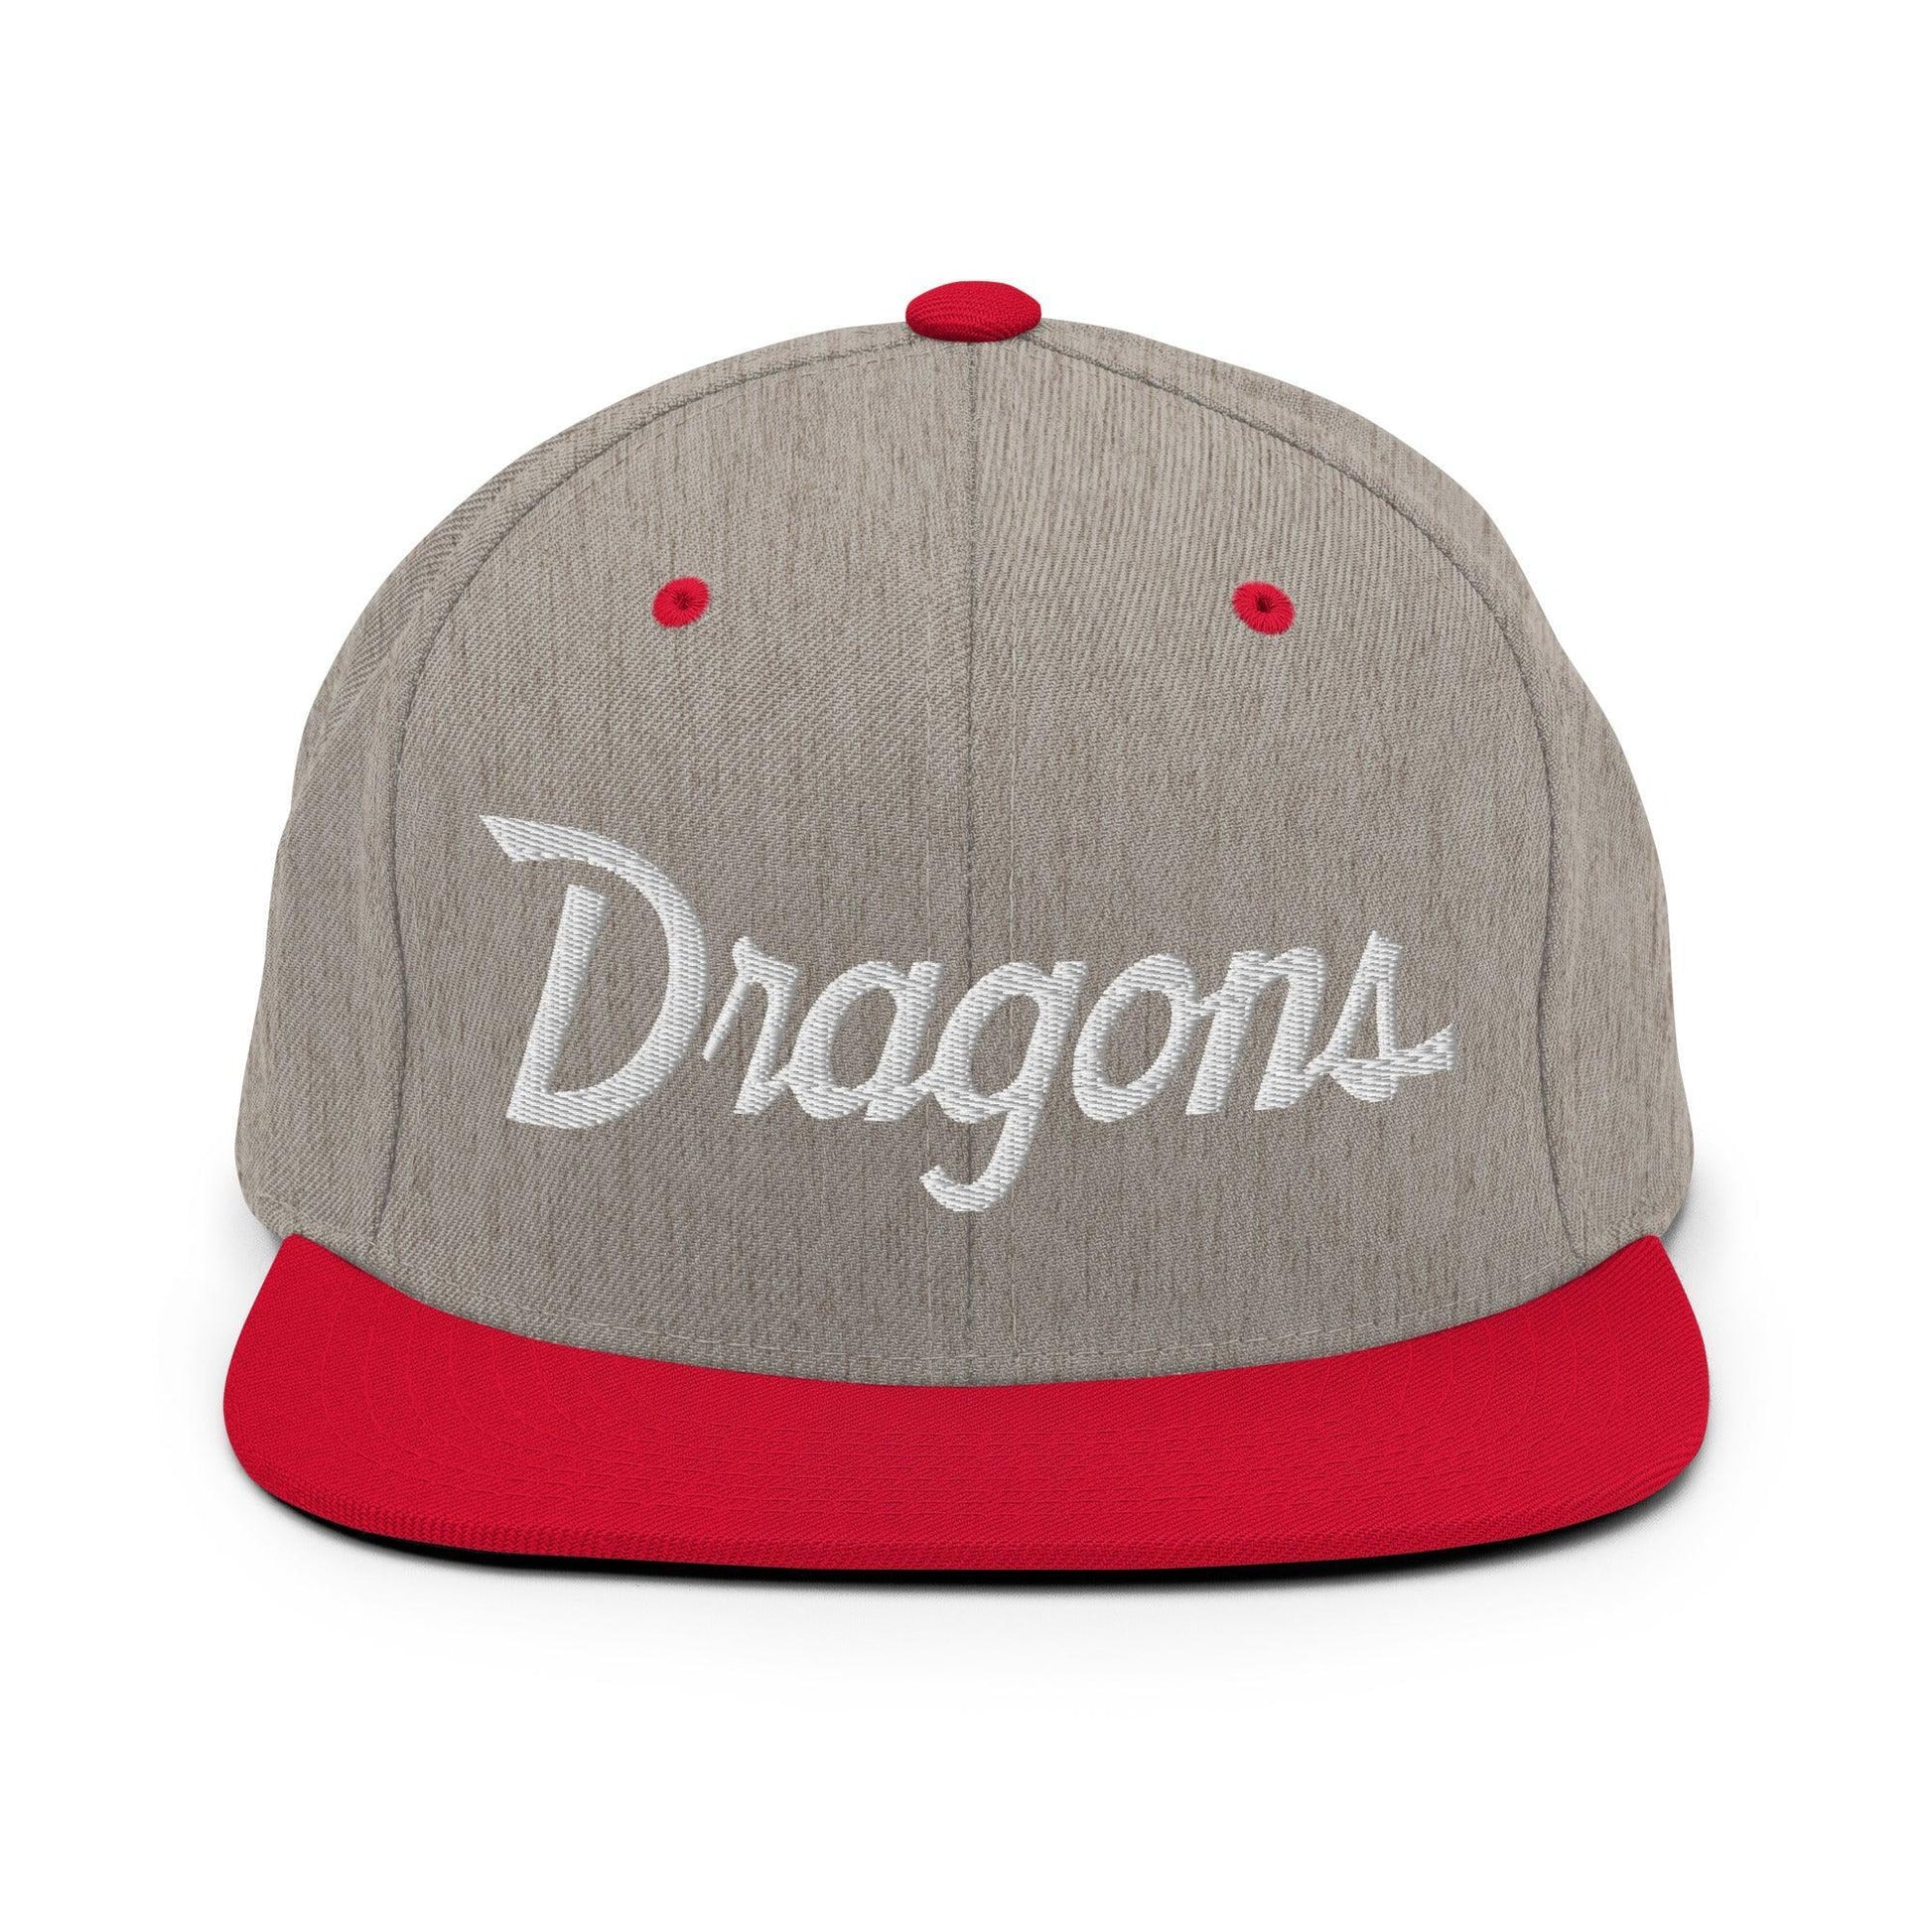 Dragons School Mascot Snapback Hat Heather Grey/ Red